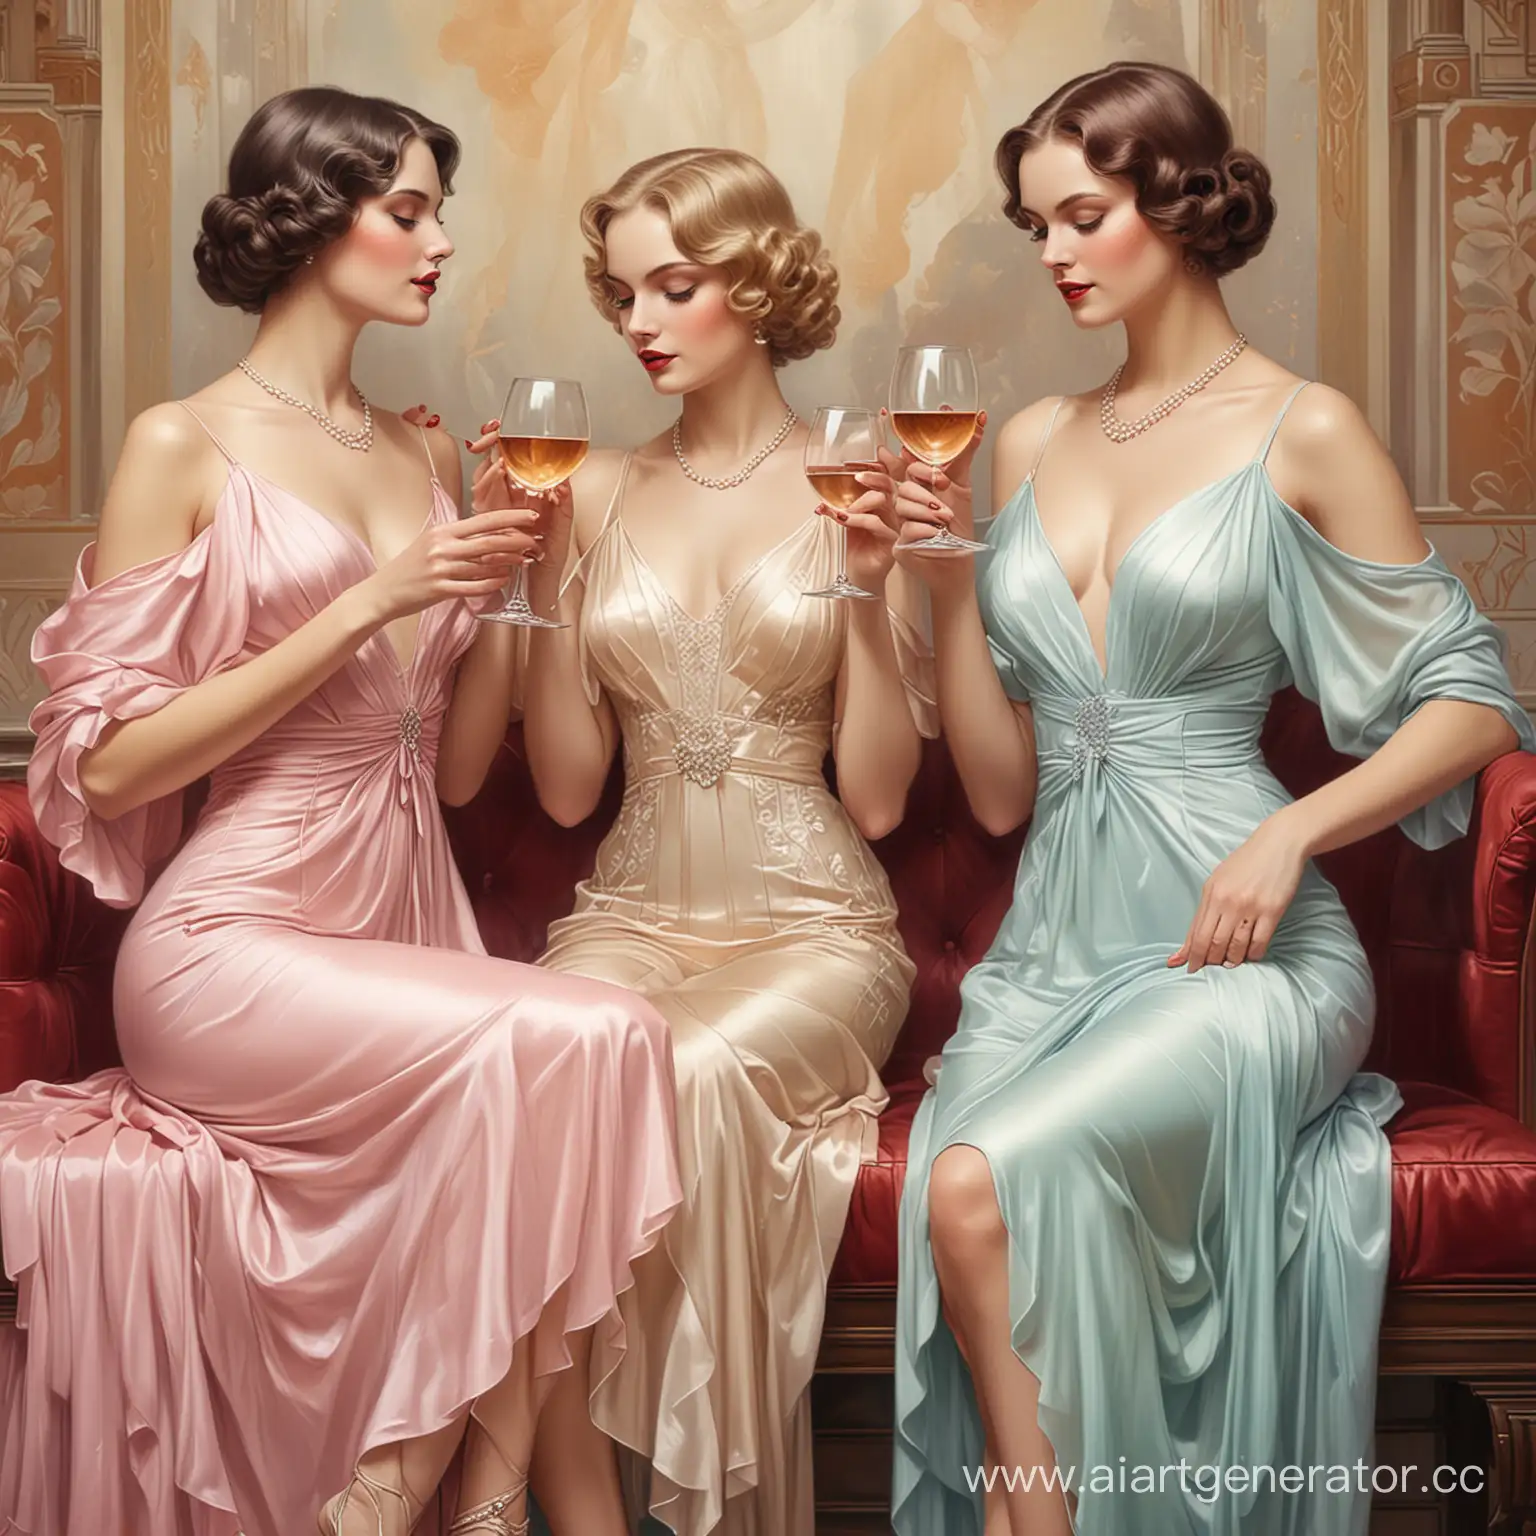 Elegant-Venusian-Women-Enjoying-Wine-and-Art-Deco-Painting